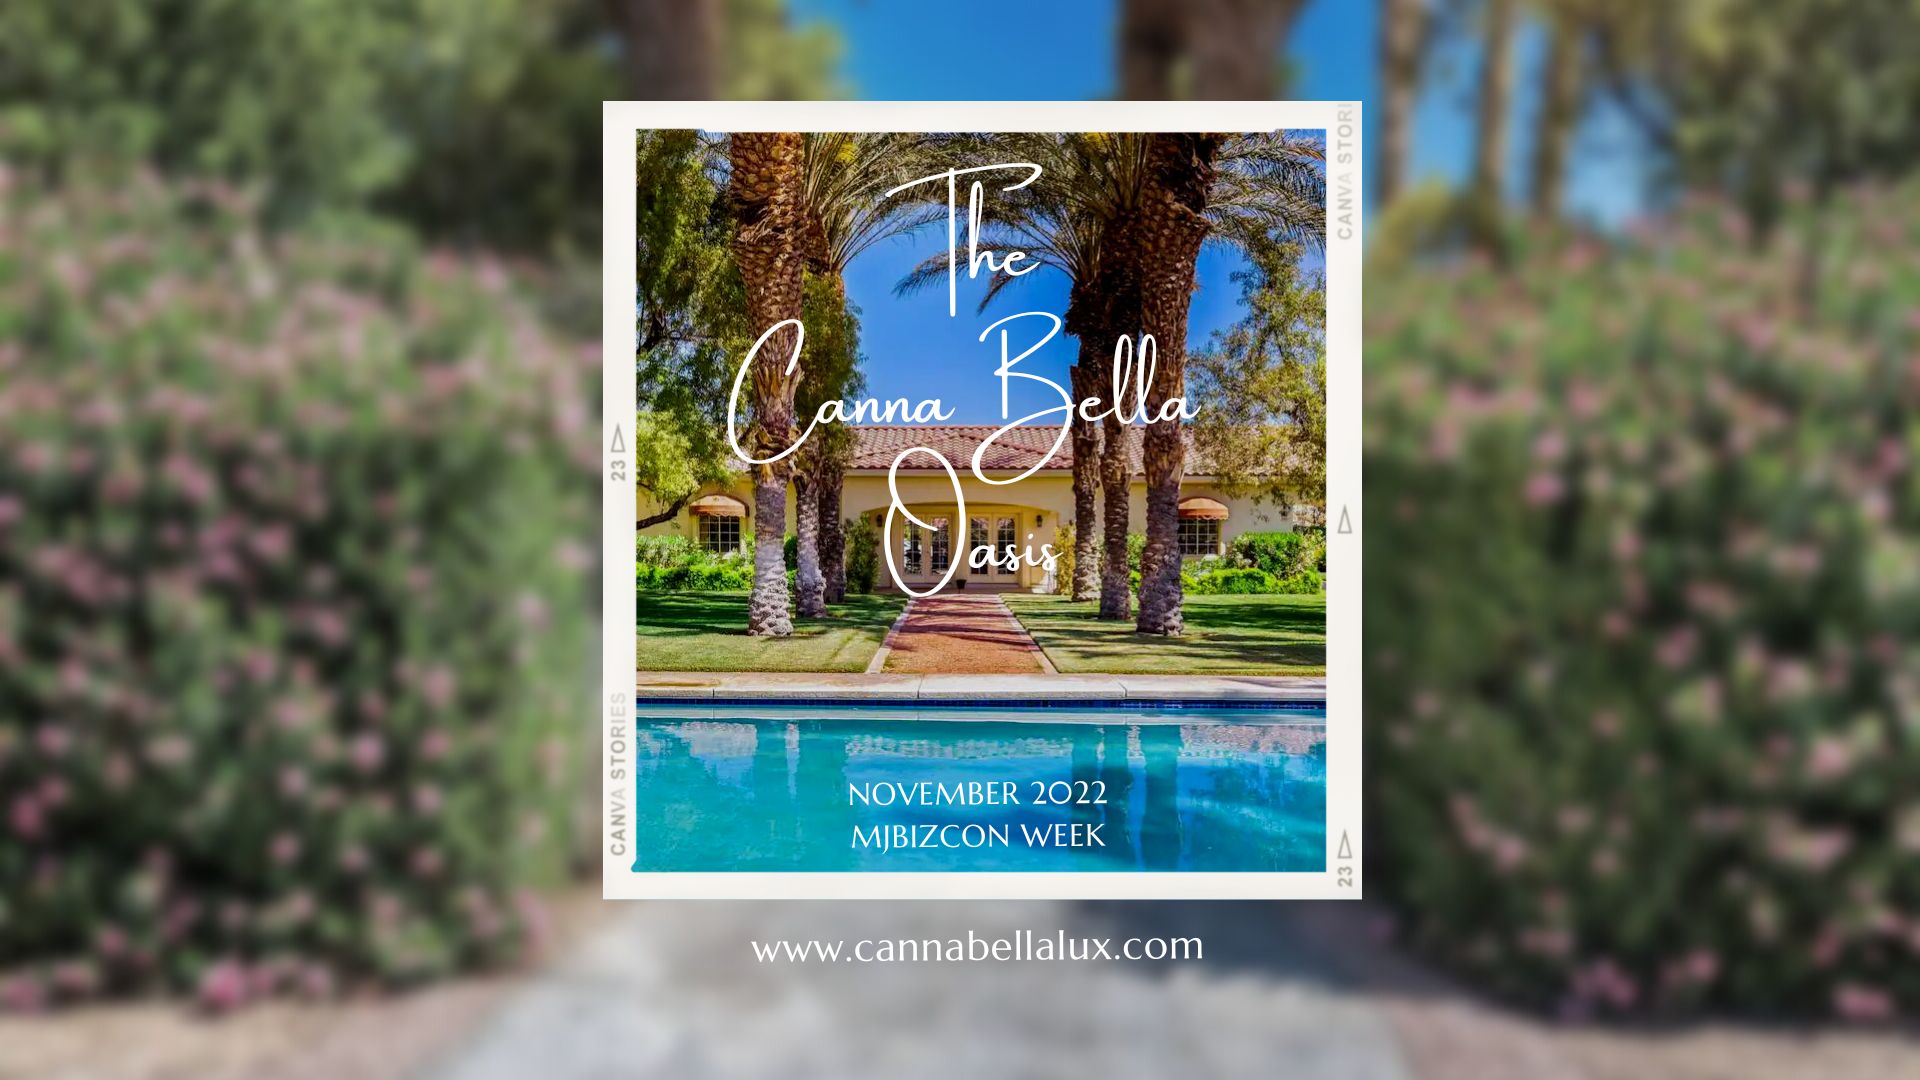 The Canna Bella Oasis